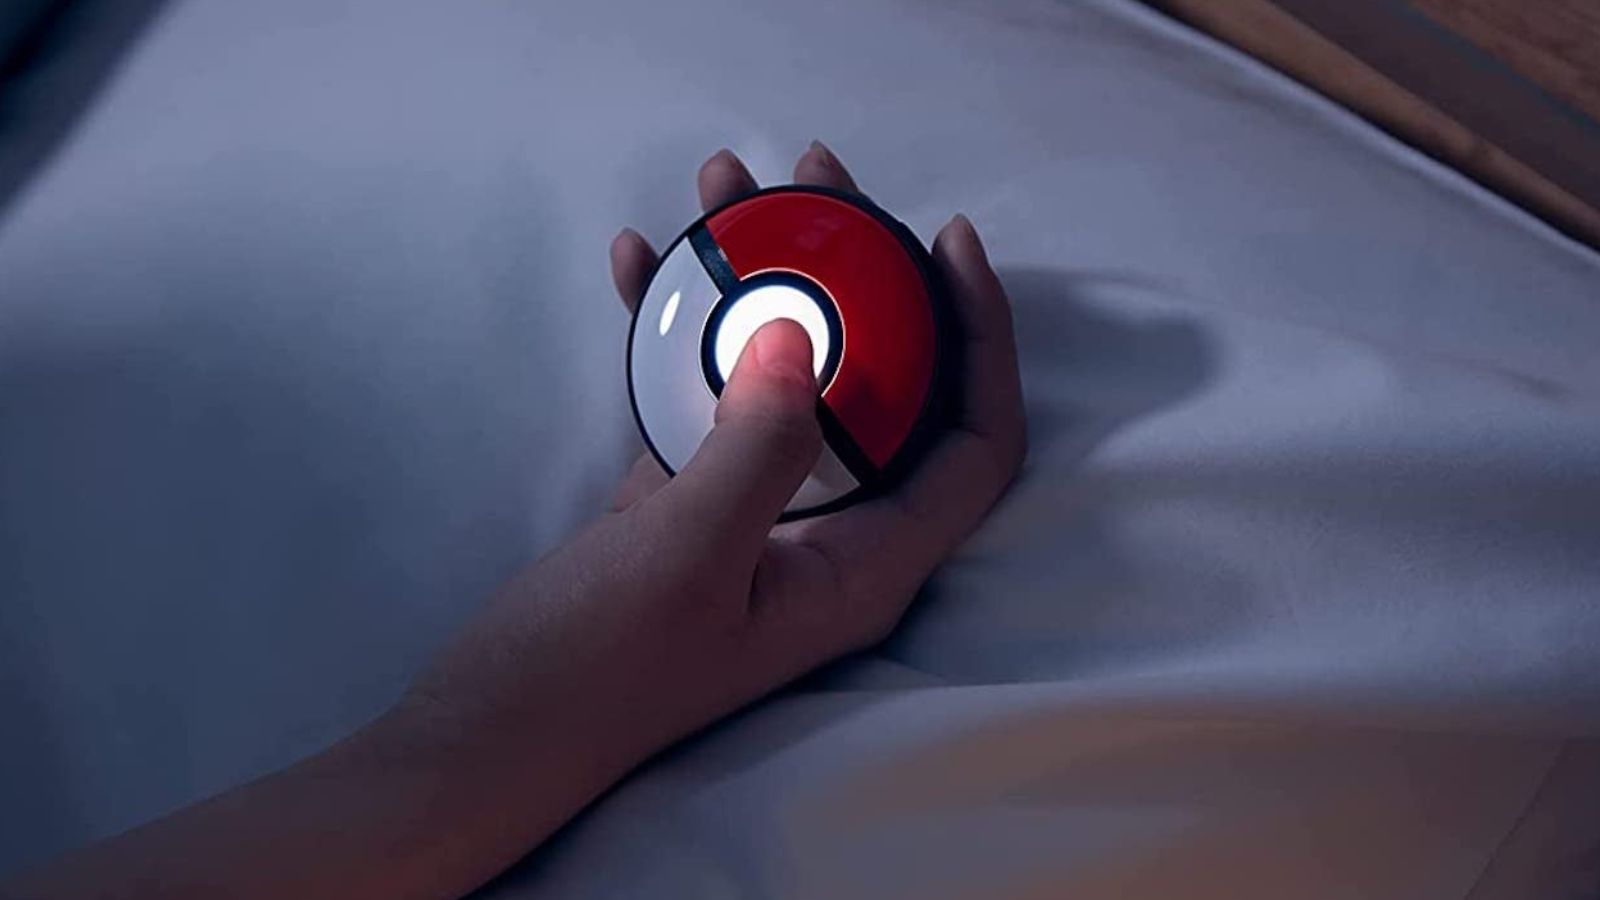 Pokemon GO Plus + 2023 Compatible with Pokemon Sleep / Pokemon Go